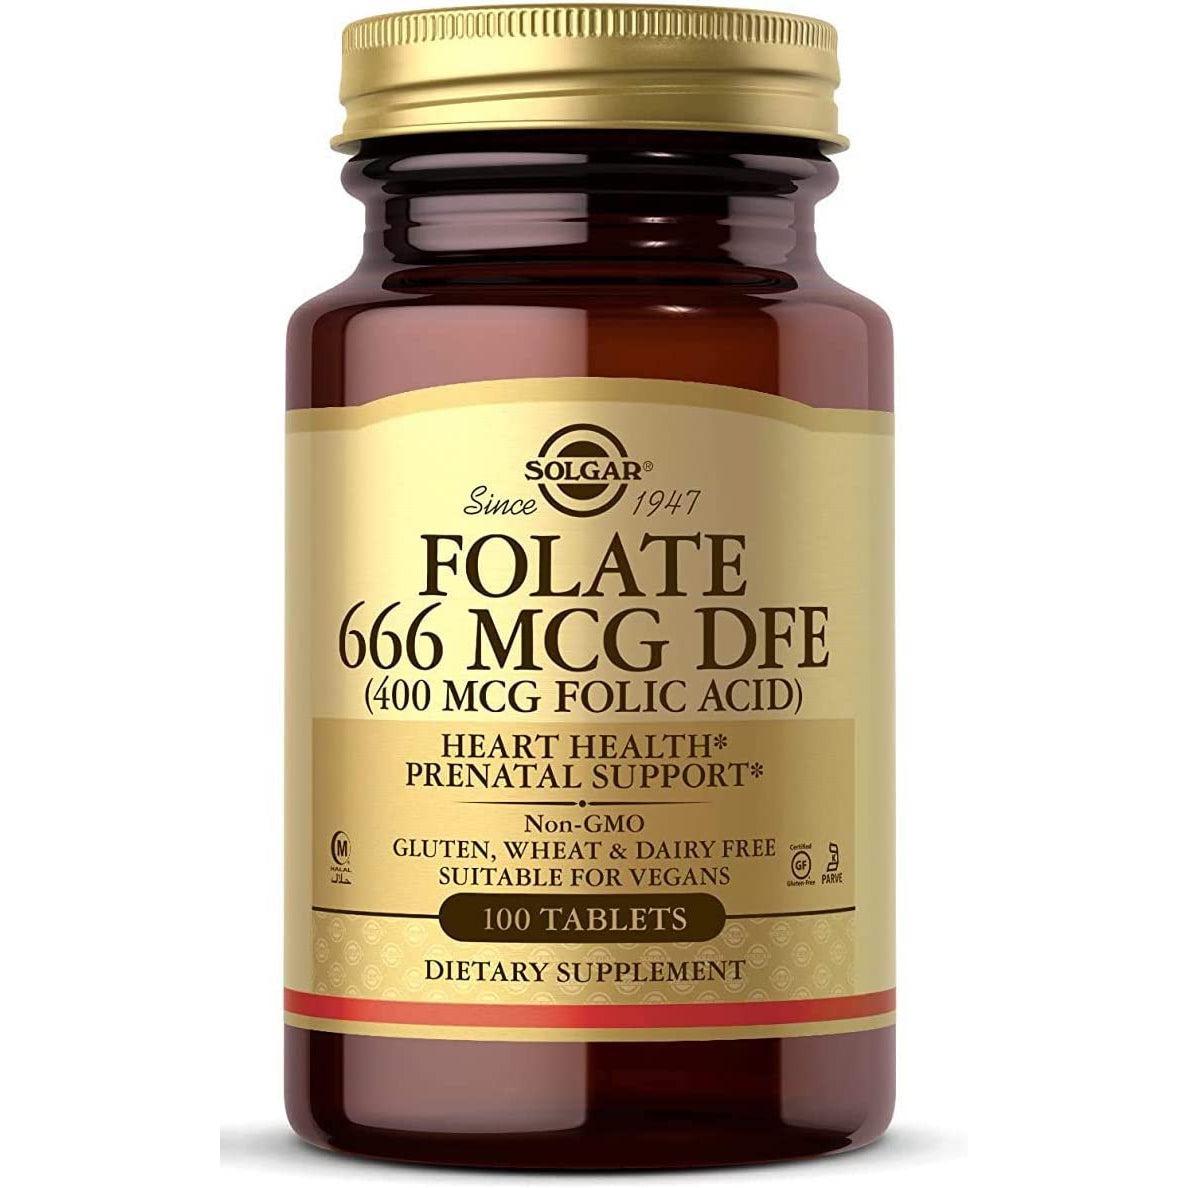 Solgar Folate 666 MCG Folic Acid 400 MCG Vitamin B9 Non-GMO 100 Vegetable Capsules